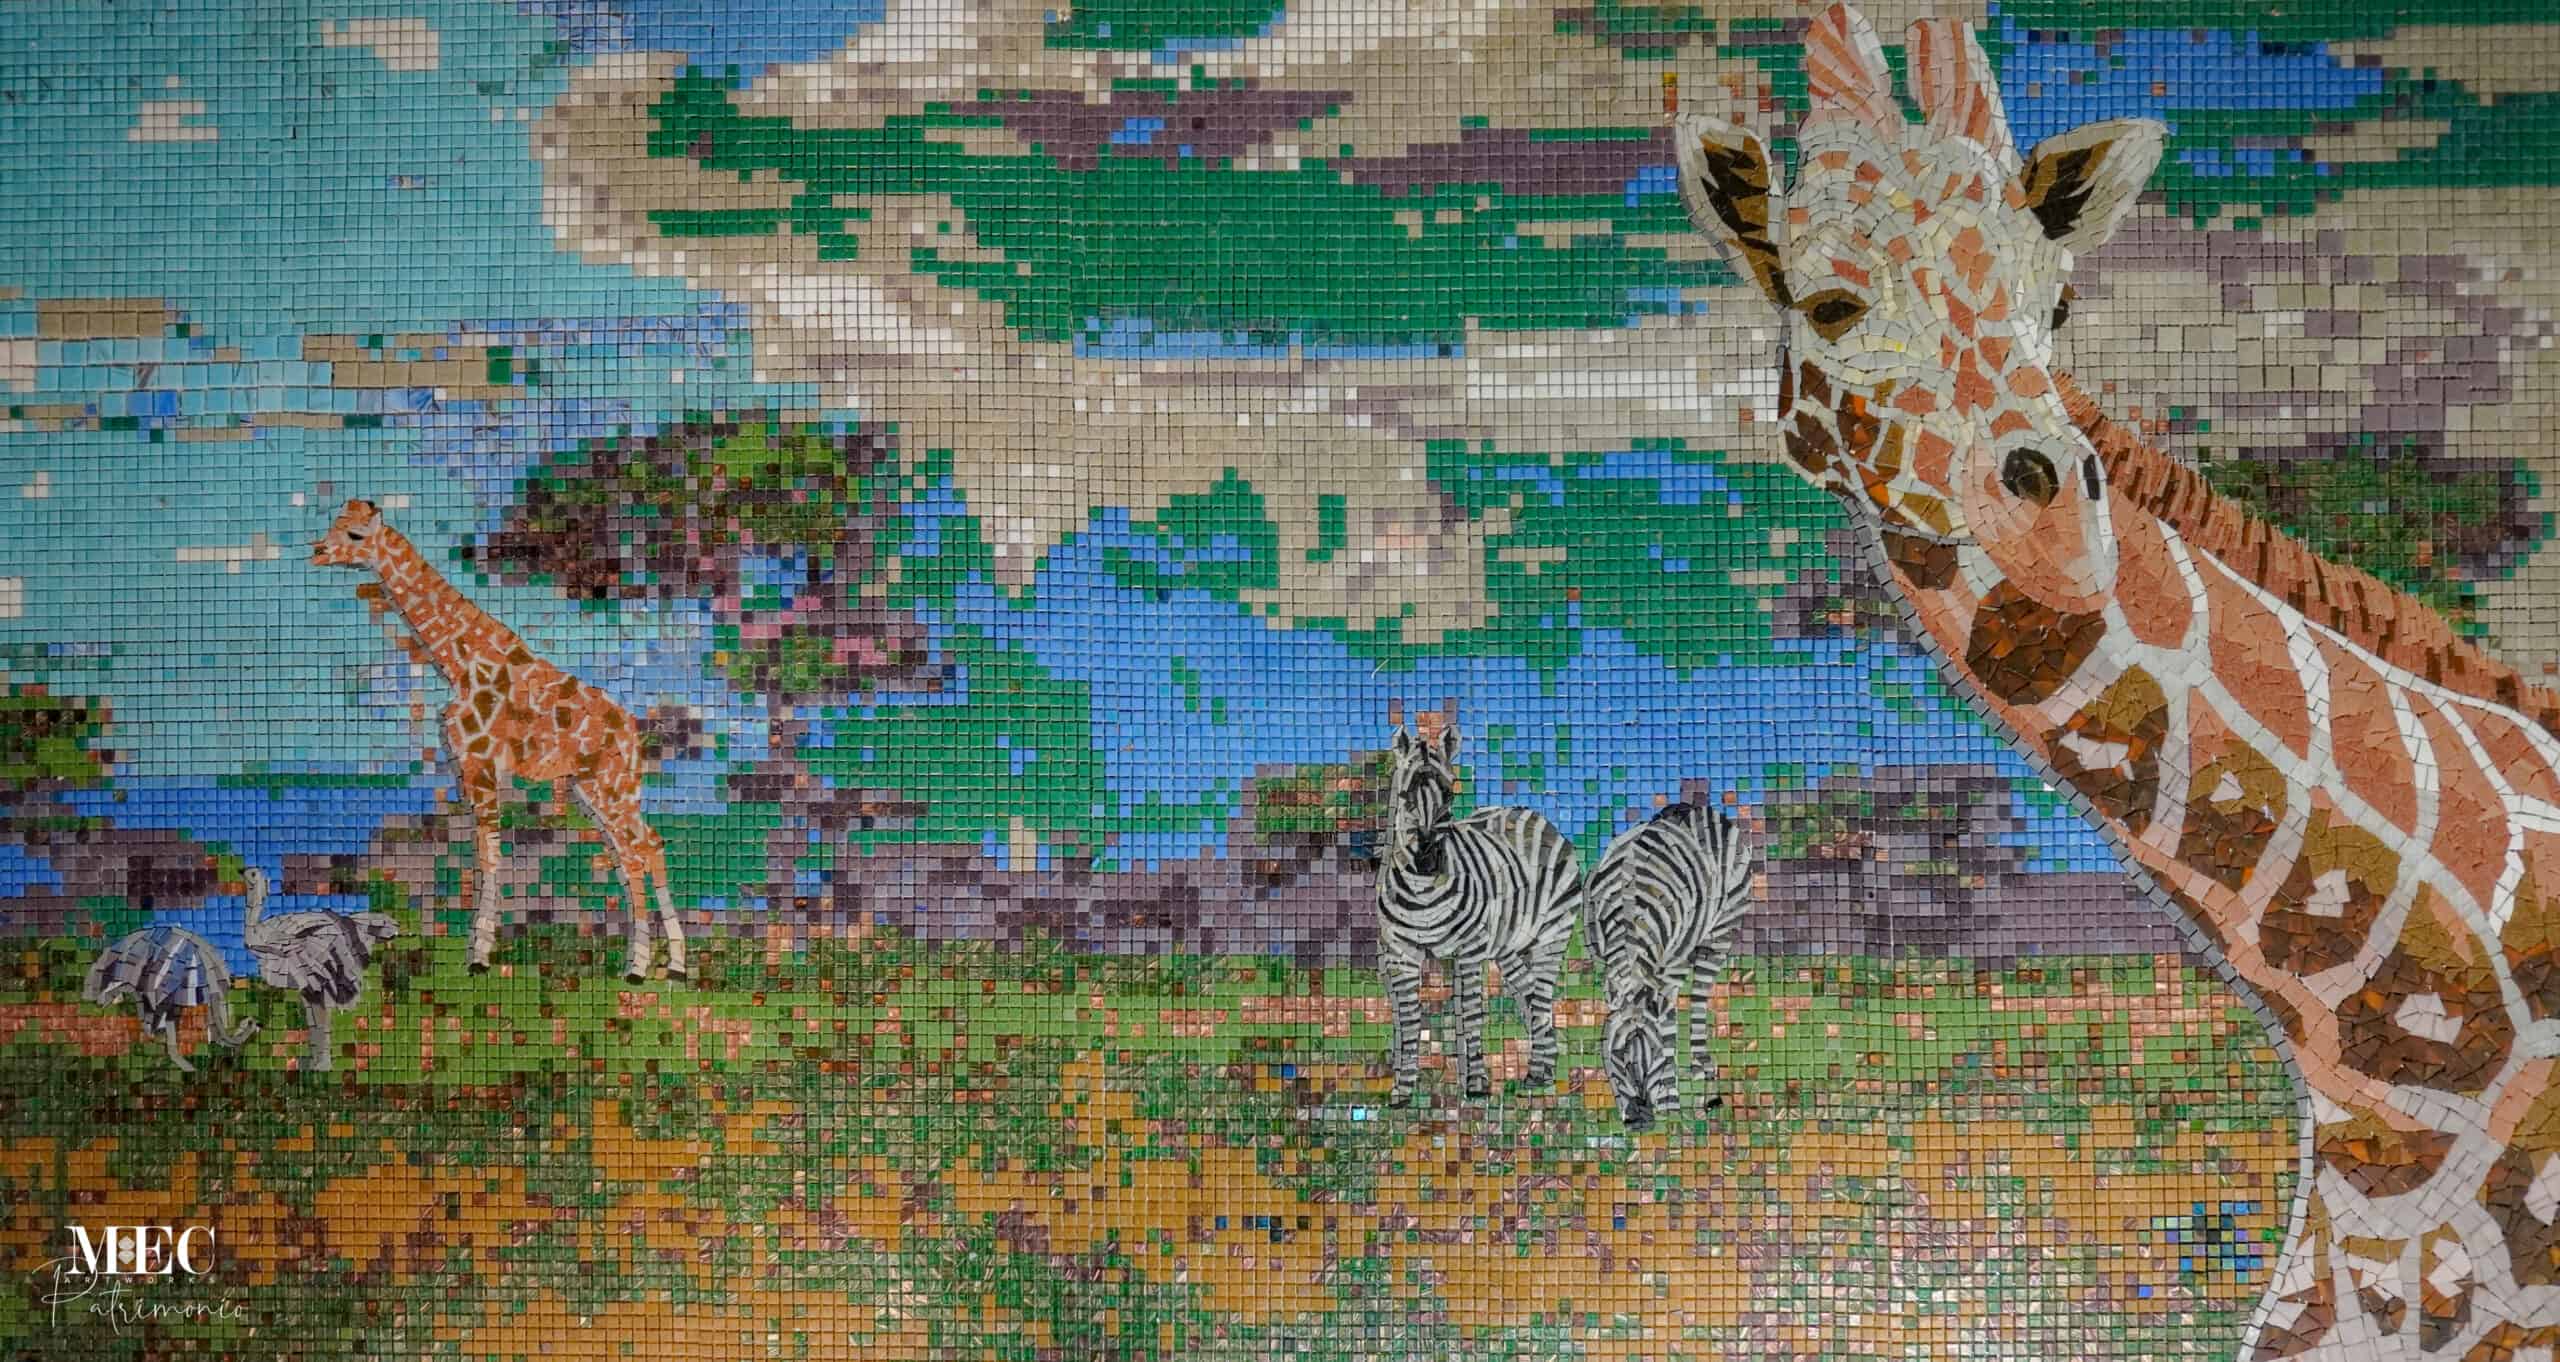 A colorful mosaic artwork depicting an African Savana's giraffe, zebras in a vibrant natural setting